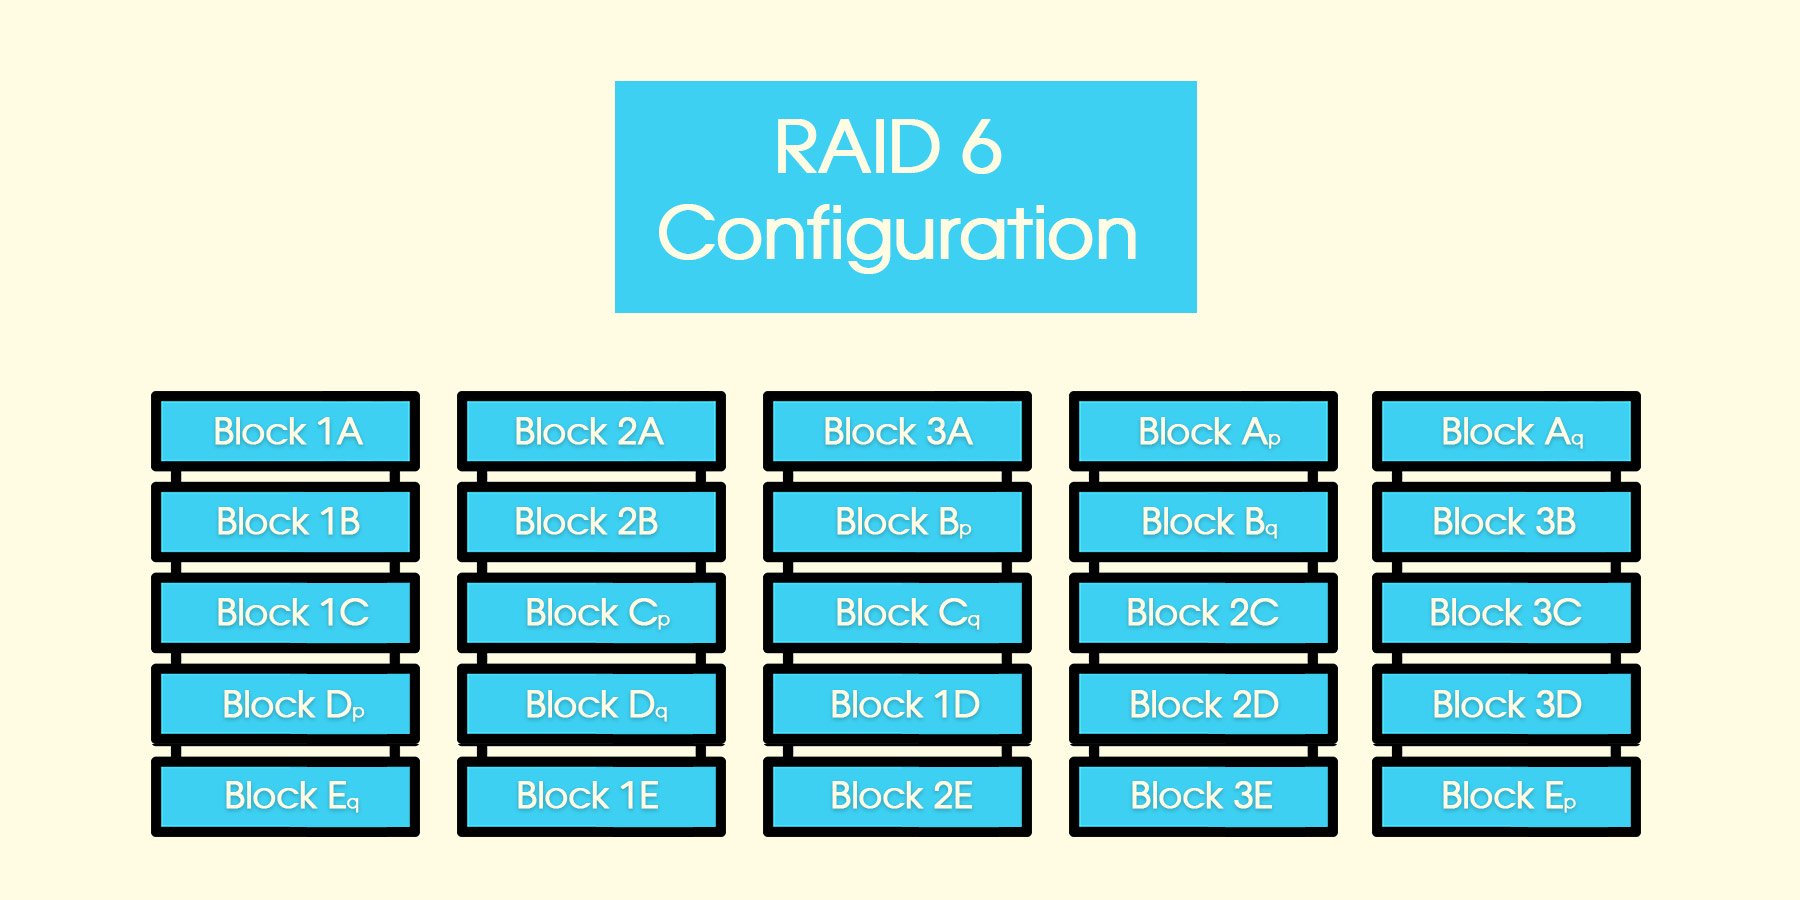 RAID 6 Configuration